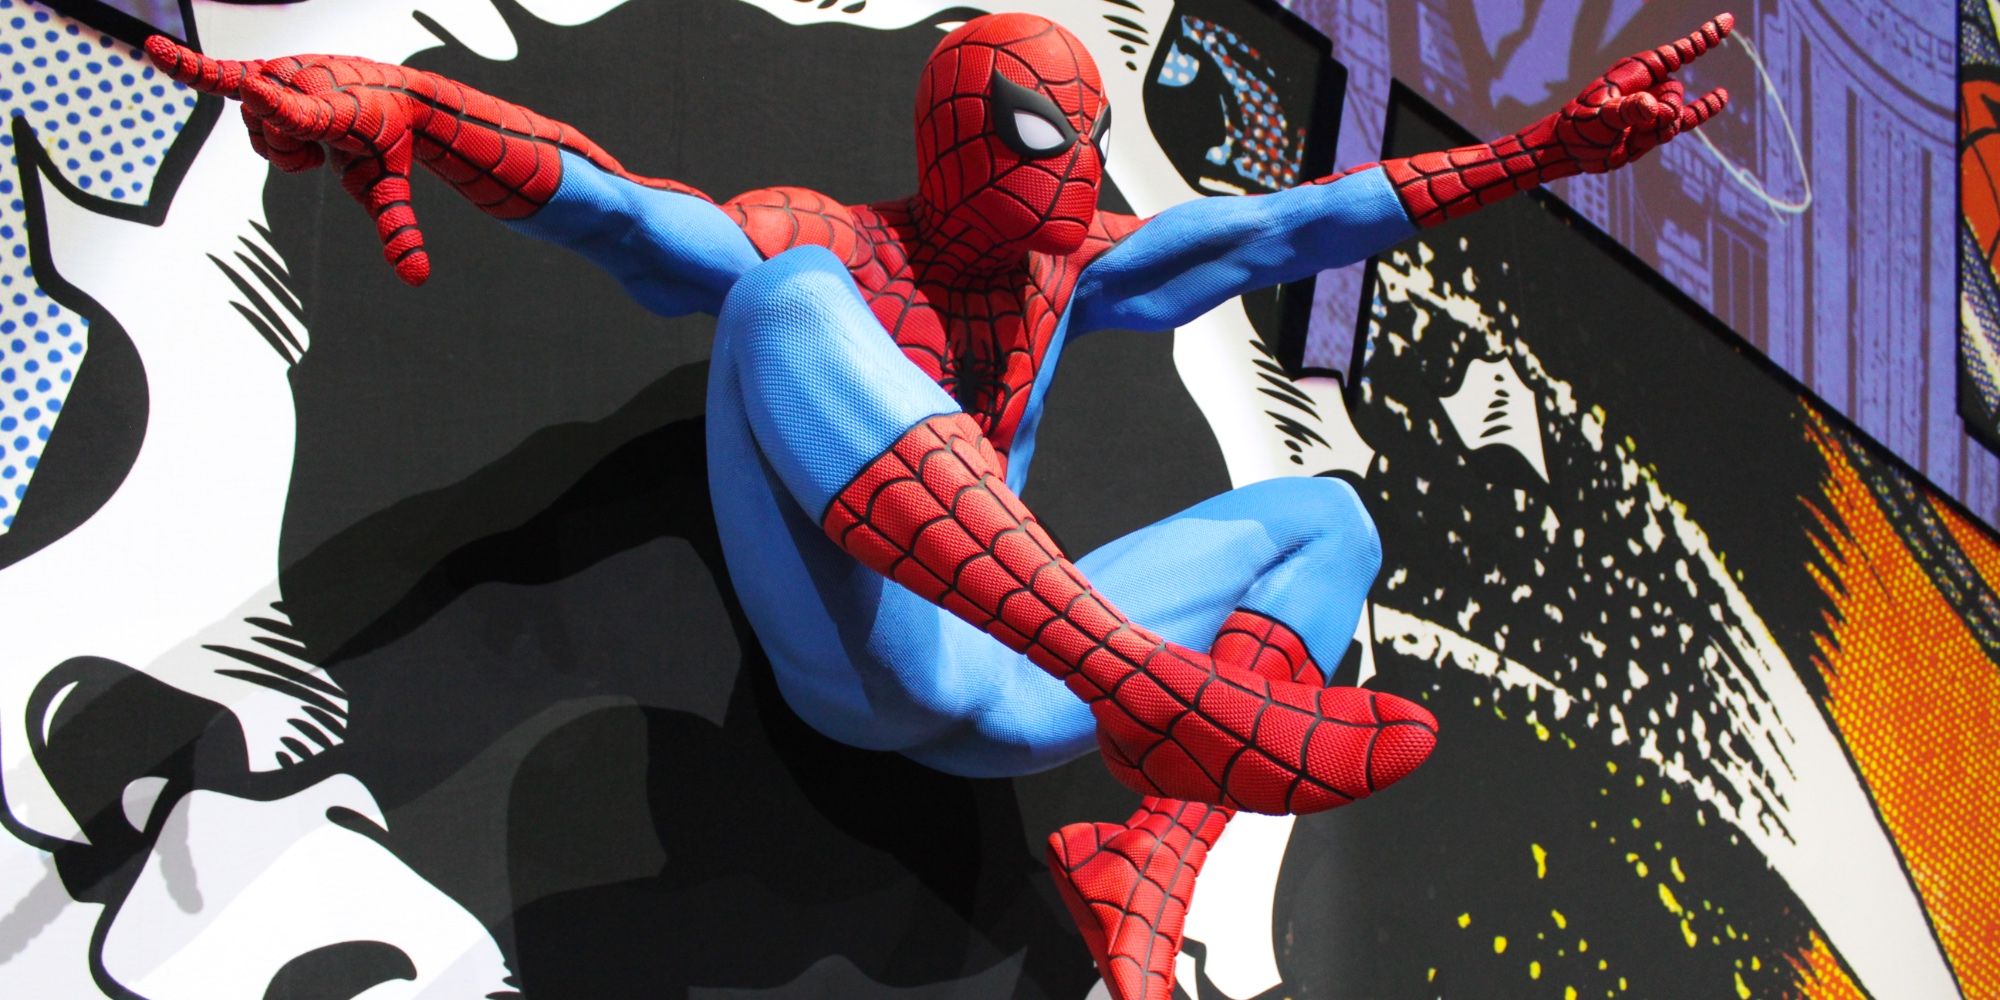 🔶 Beyond Amazing: SDCC's Spider-Man Anniversary Exhibit Is Now Open 📖